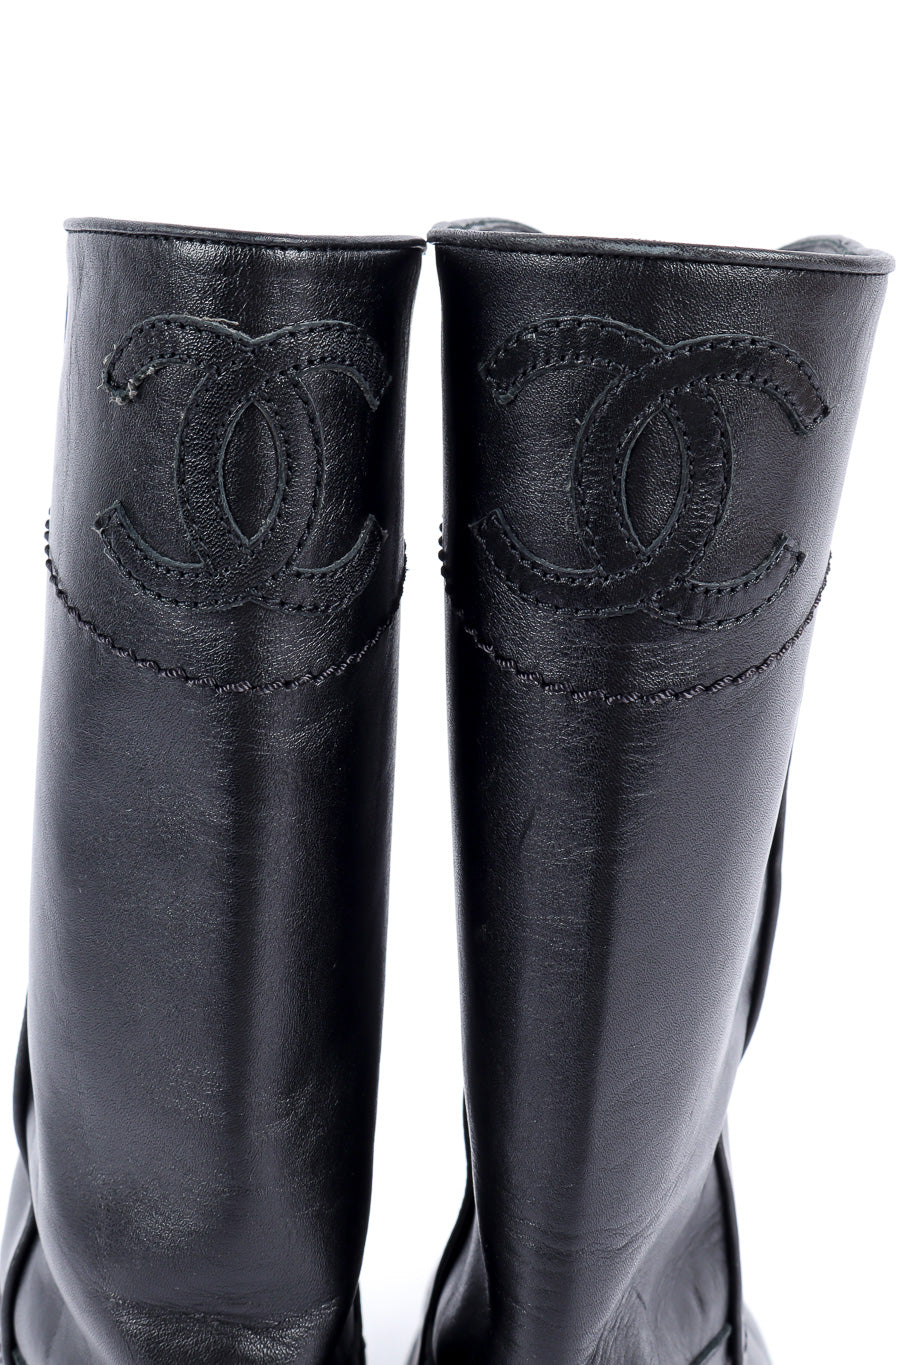 Chanel interlocking CC mid-calf boots CC stitch detail @recessla